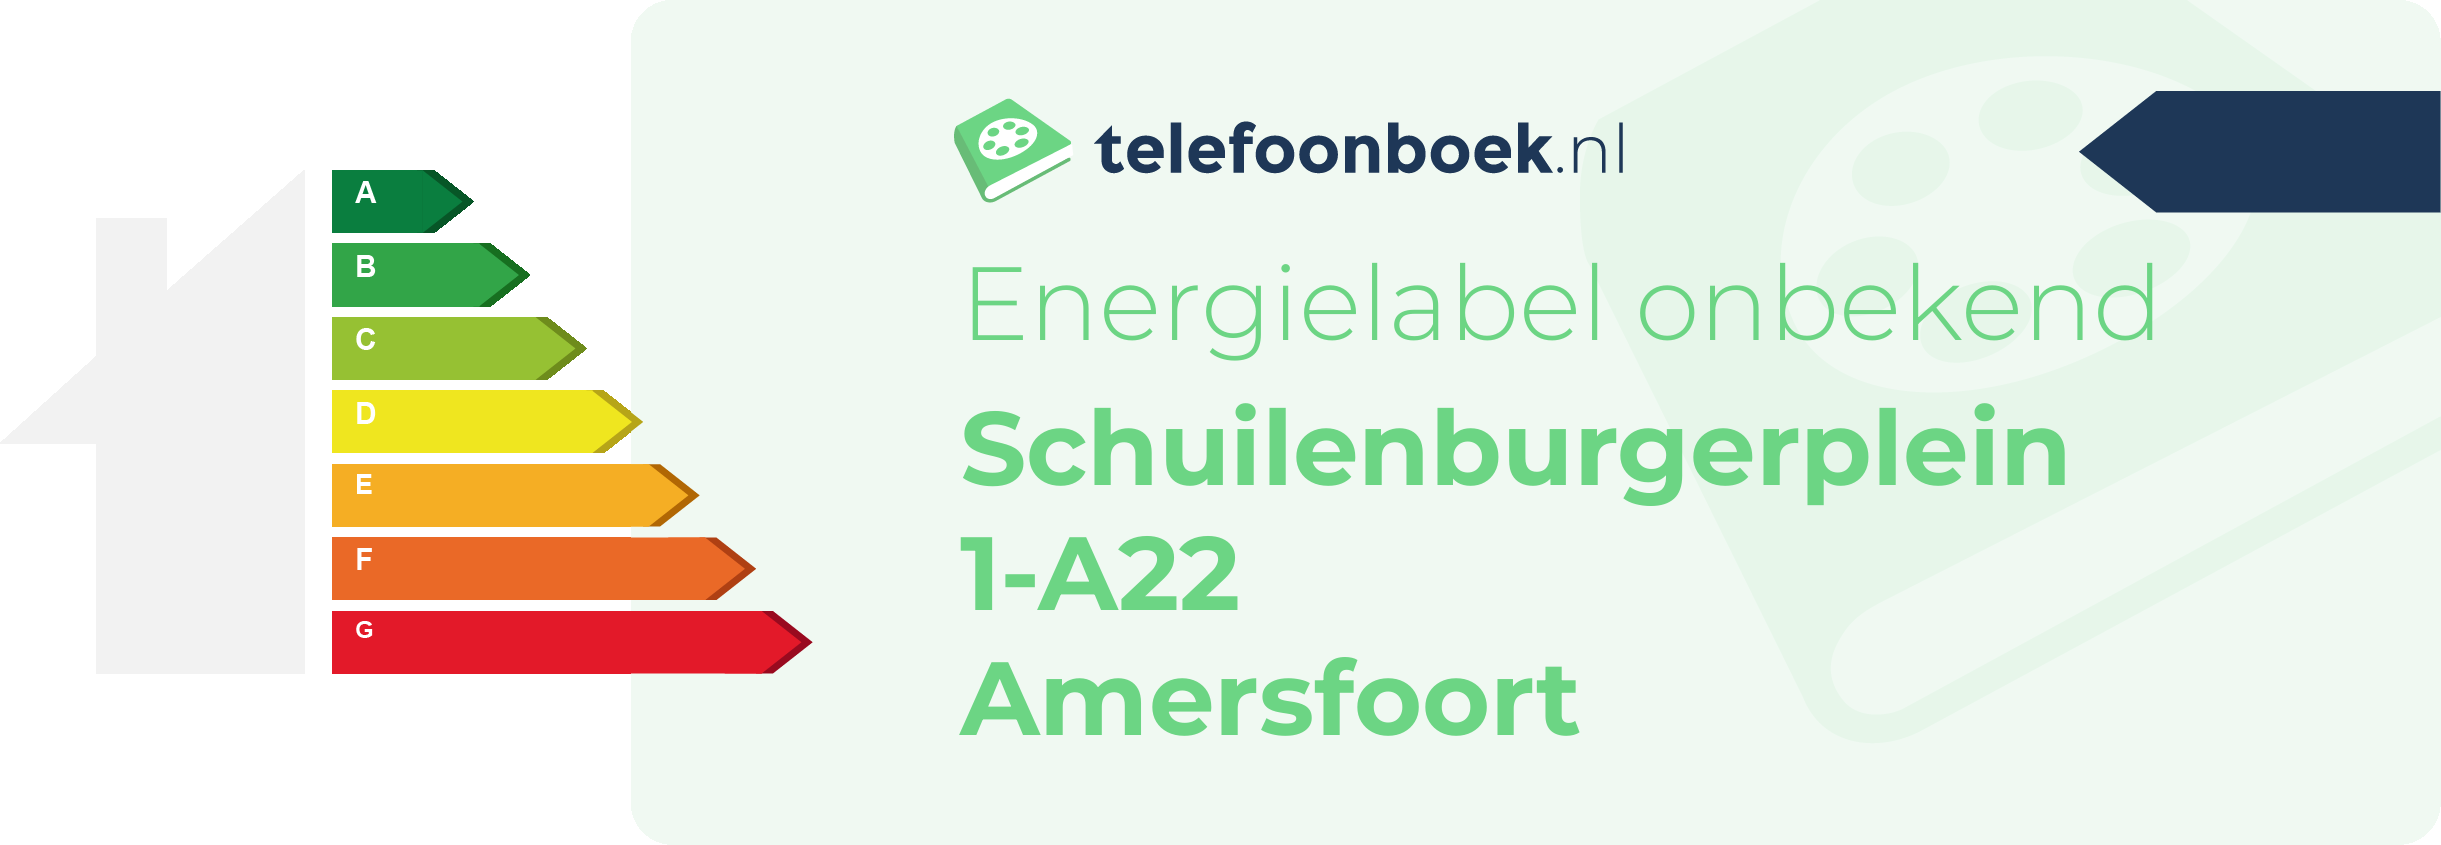 Energielabel Schuilenburgerplein 1-A22 Amersfoort